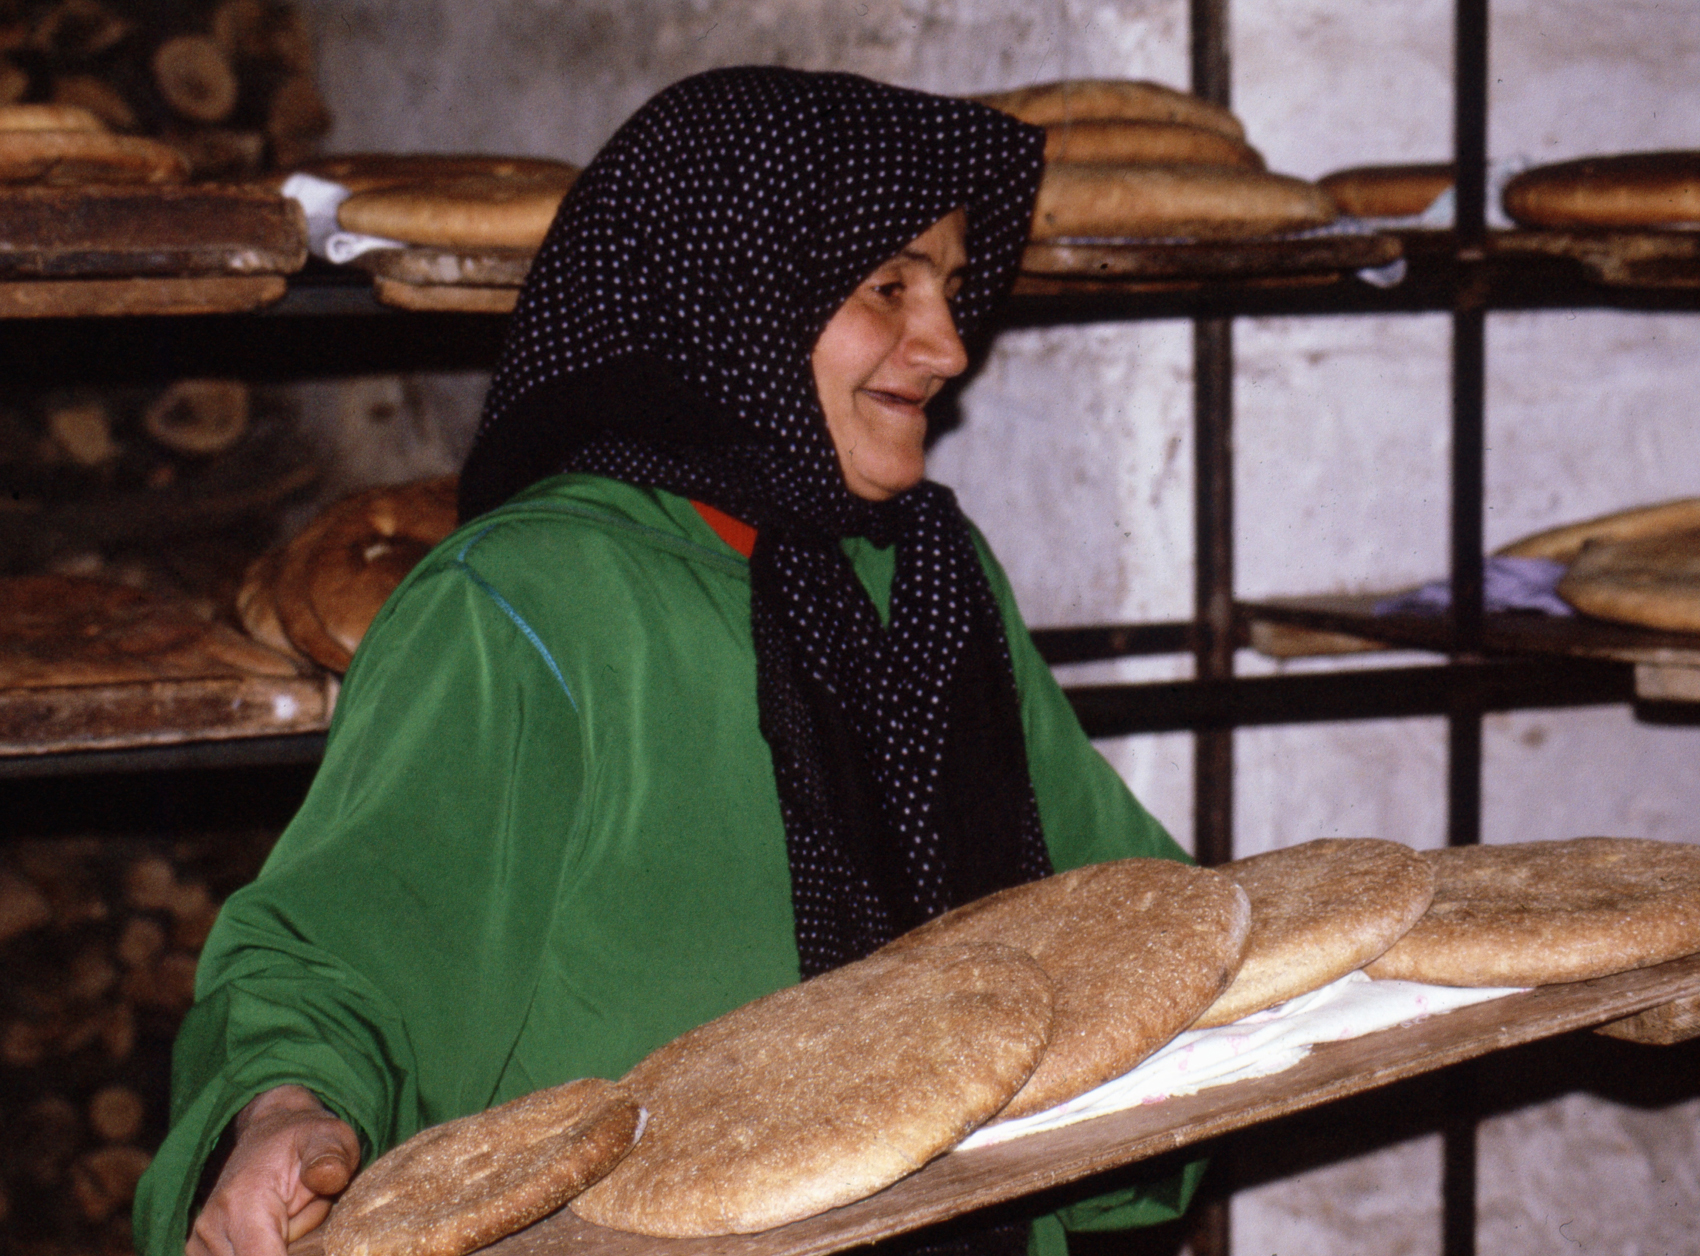 Baking bread, Morocco